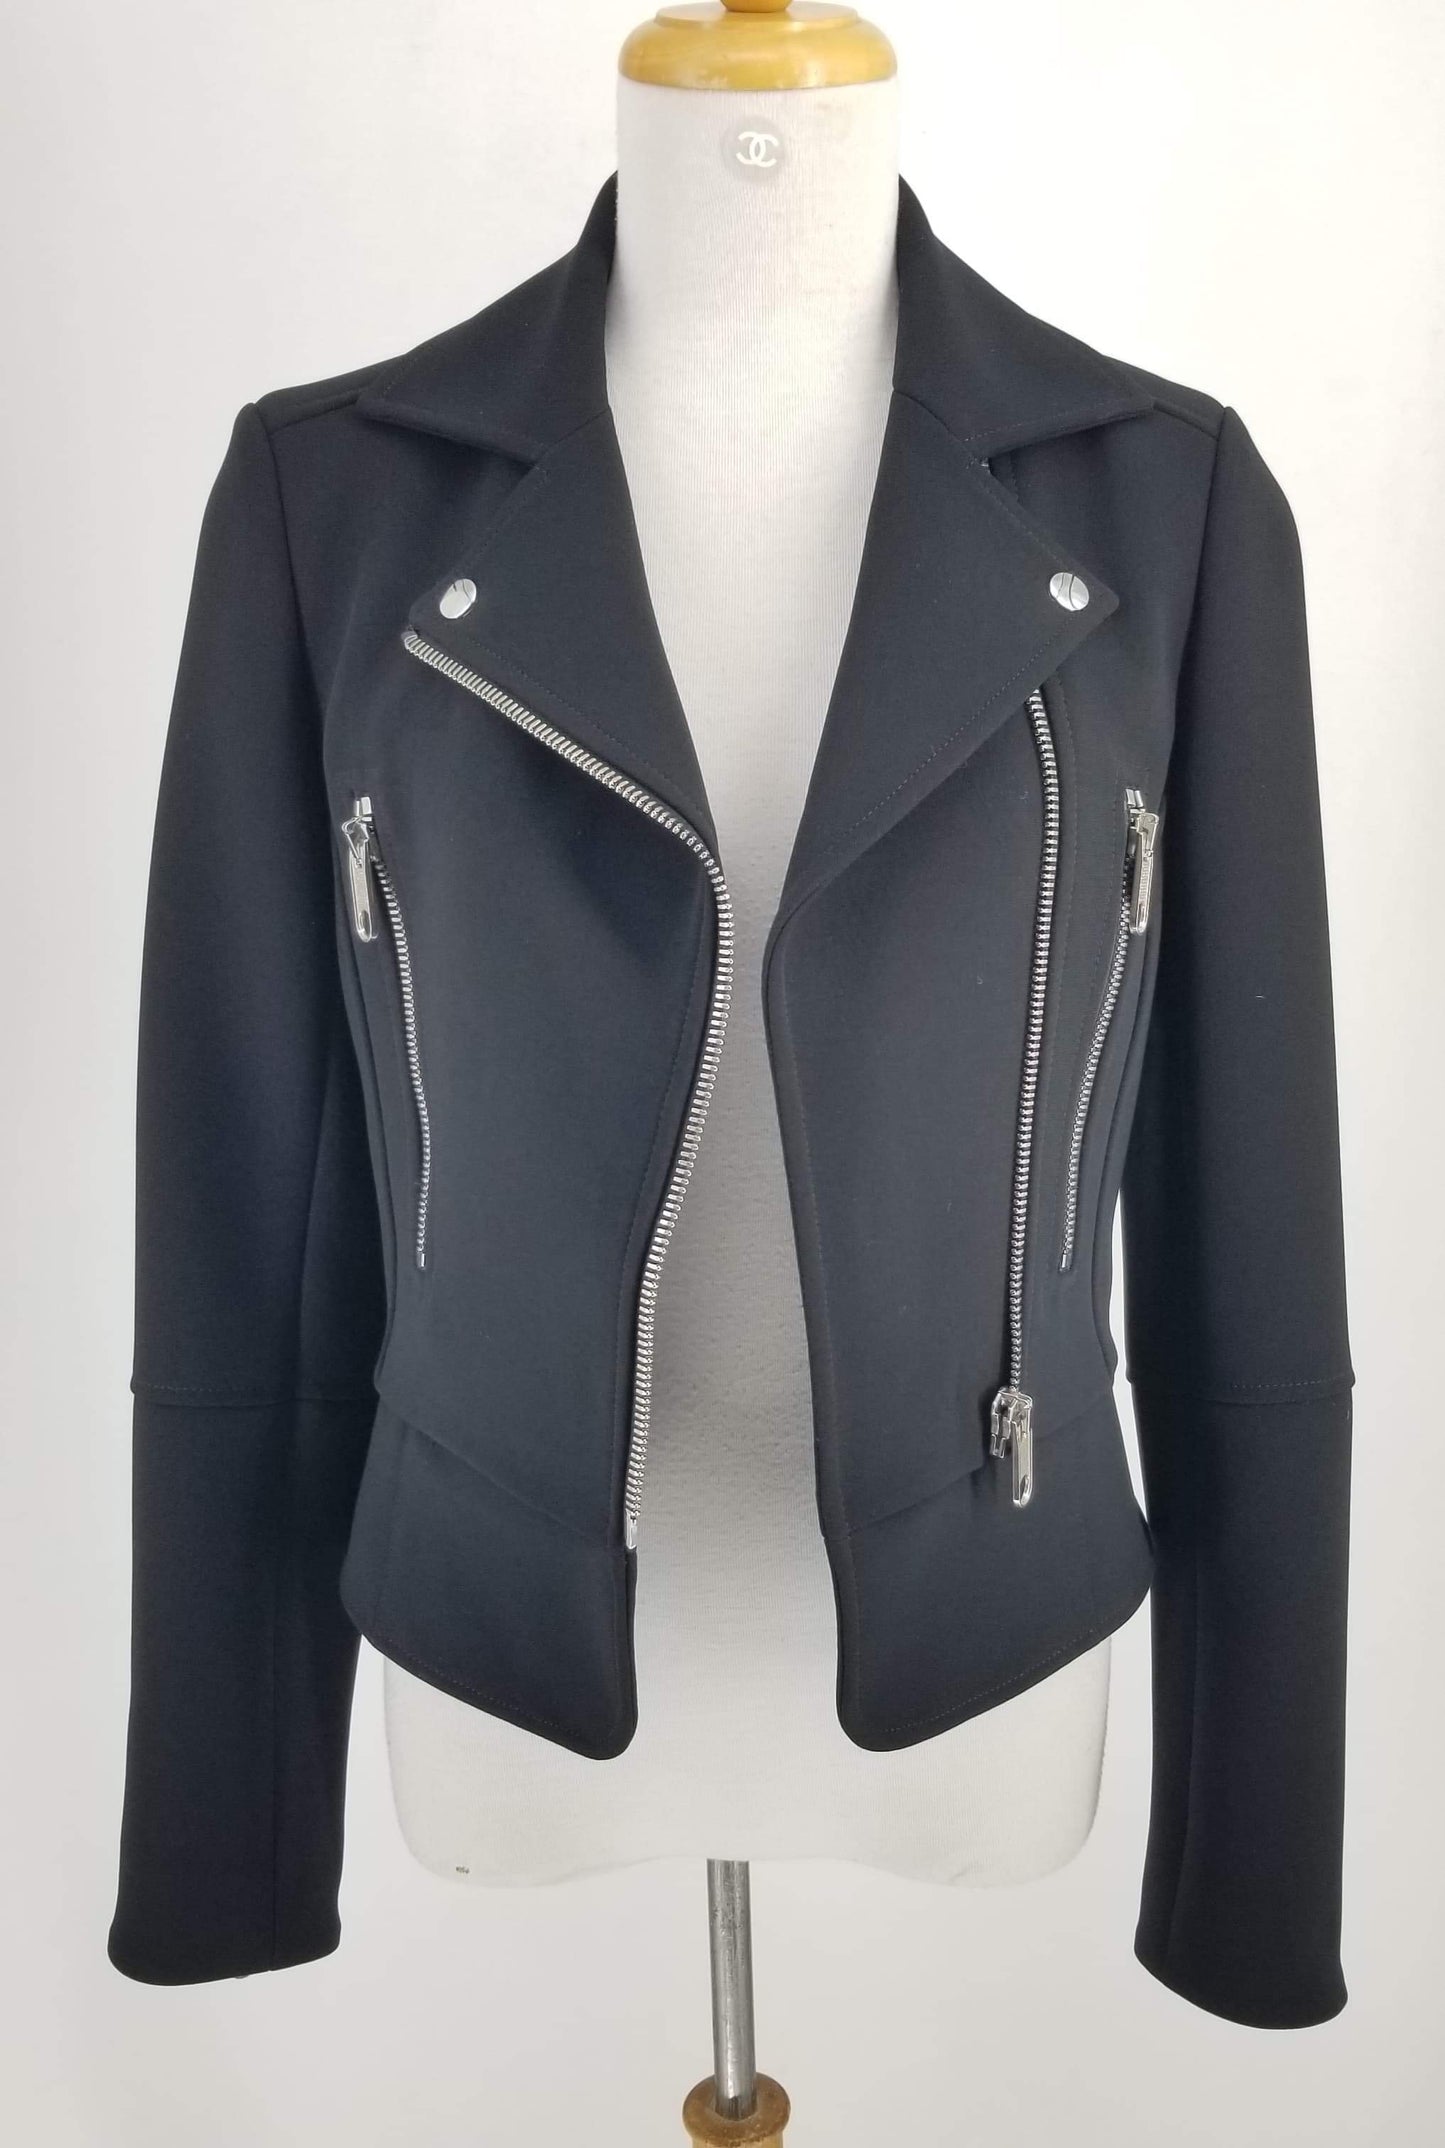 Authentic Balenciaga Black Moto Jacket Sz XS/S